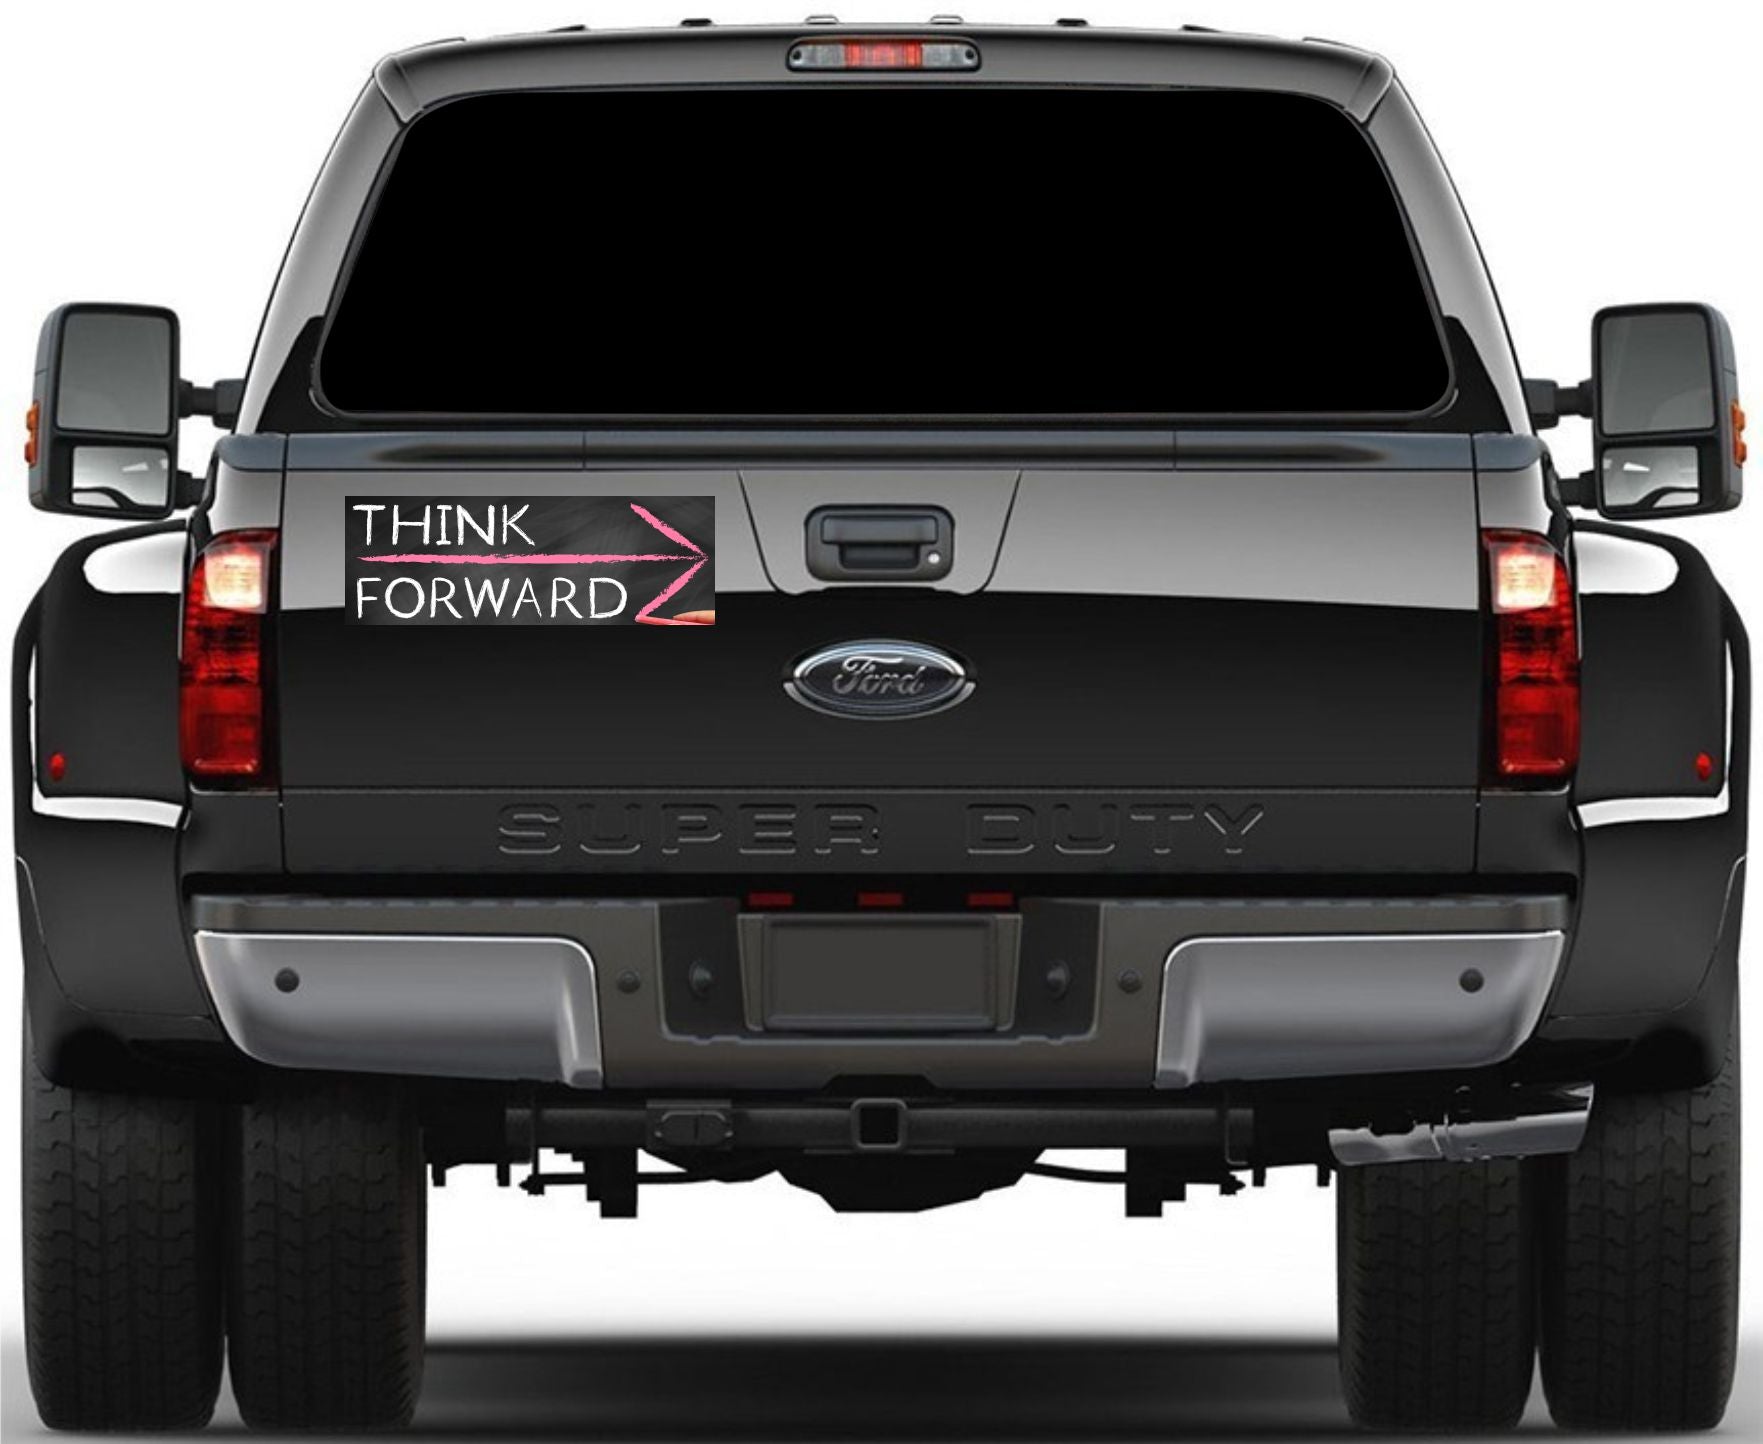 Think Foward Bumper sticker/magnet - Powercall Sirens LLC